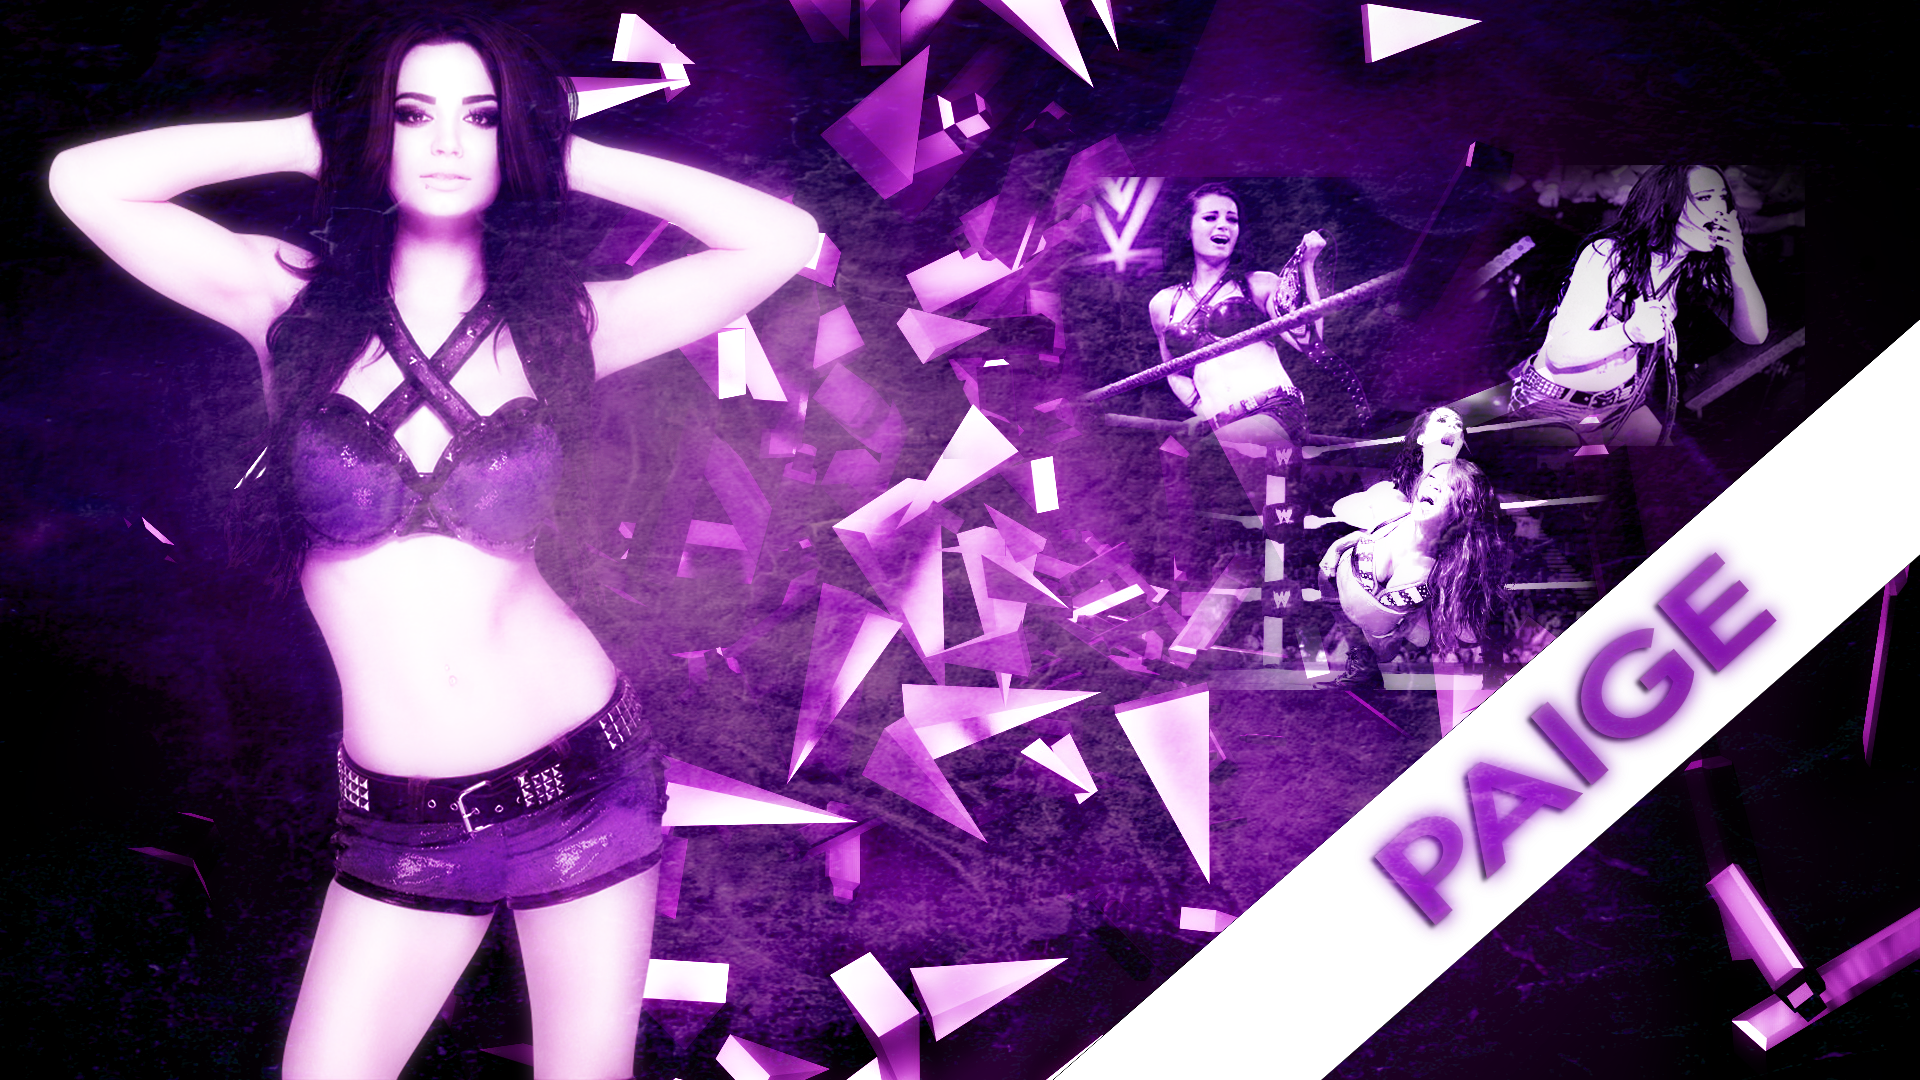 Free Download Wwe Paige Icon Wwe Divas Champion Paige 1920x1080